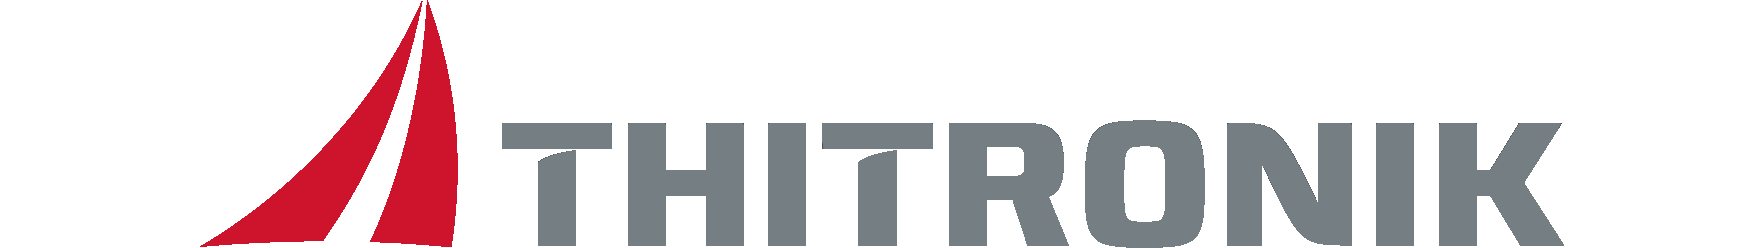 thitronik logo